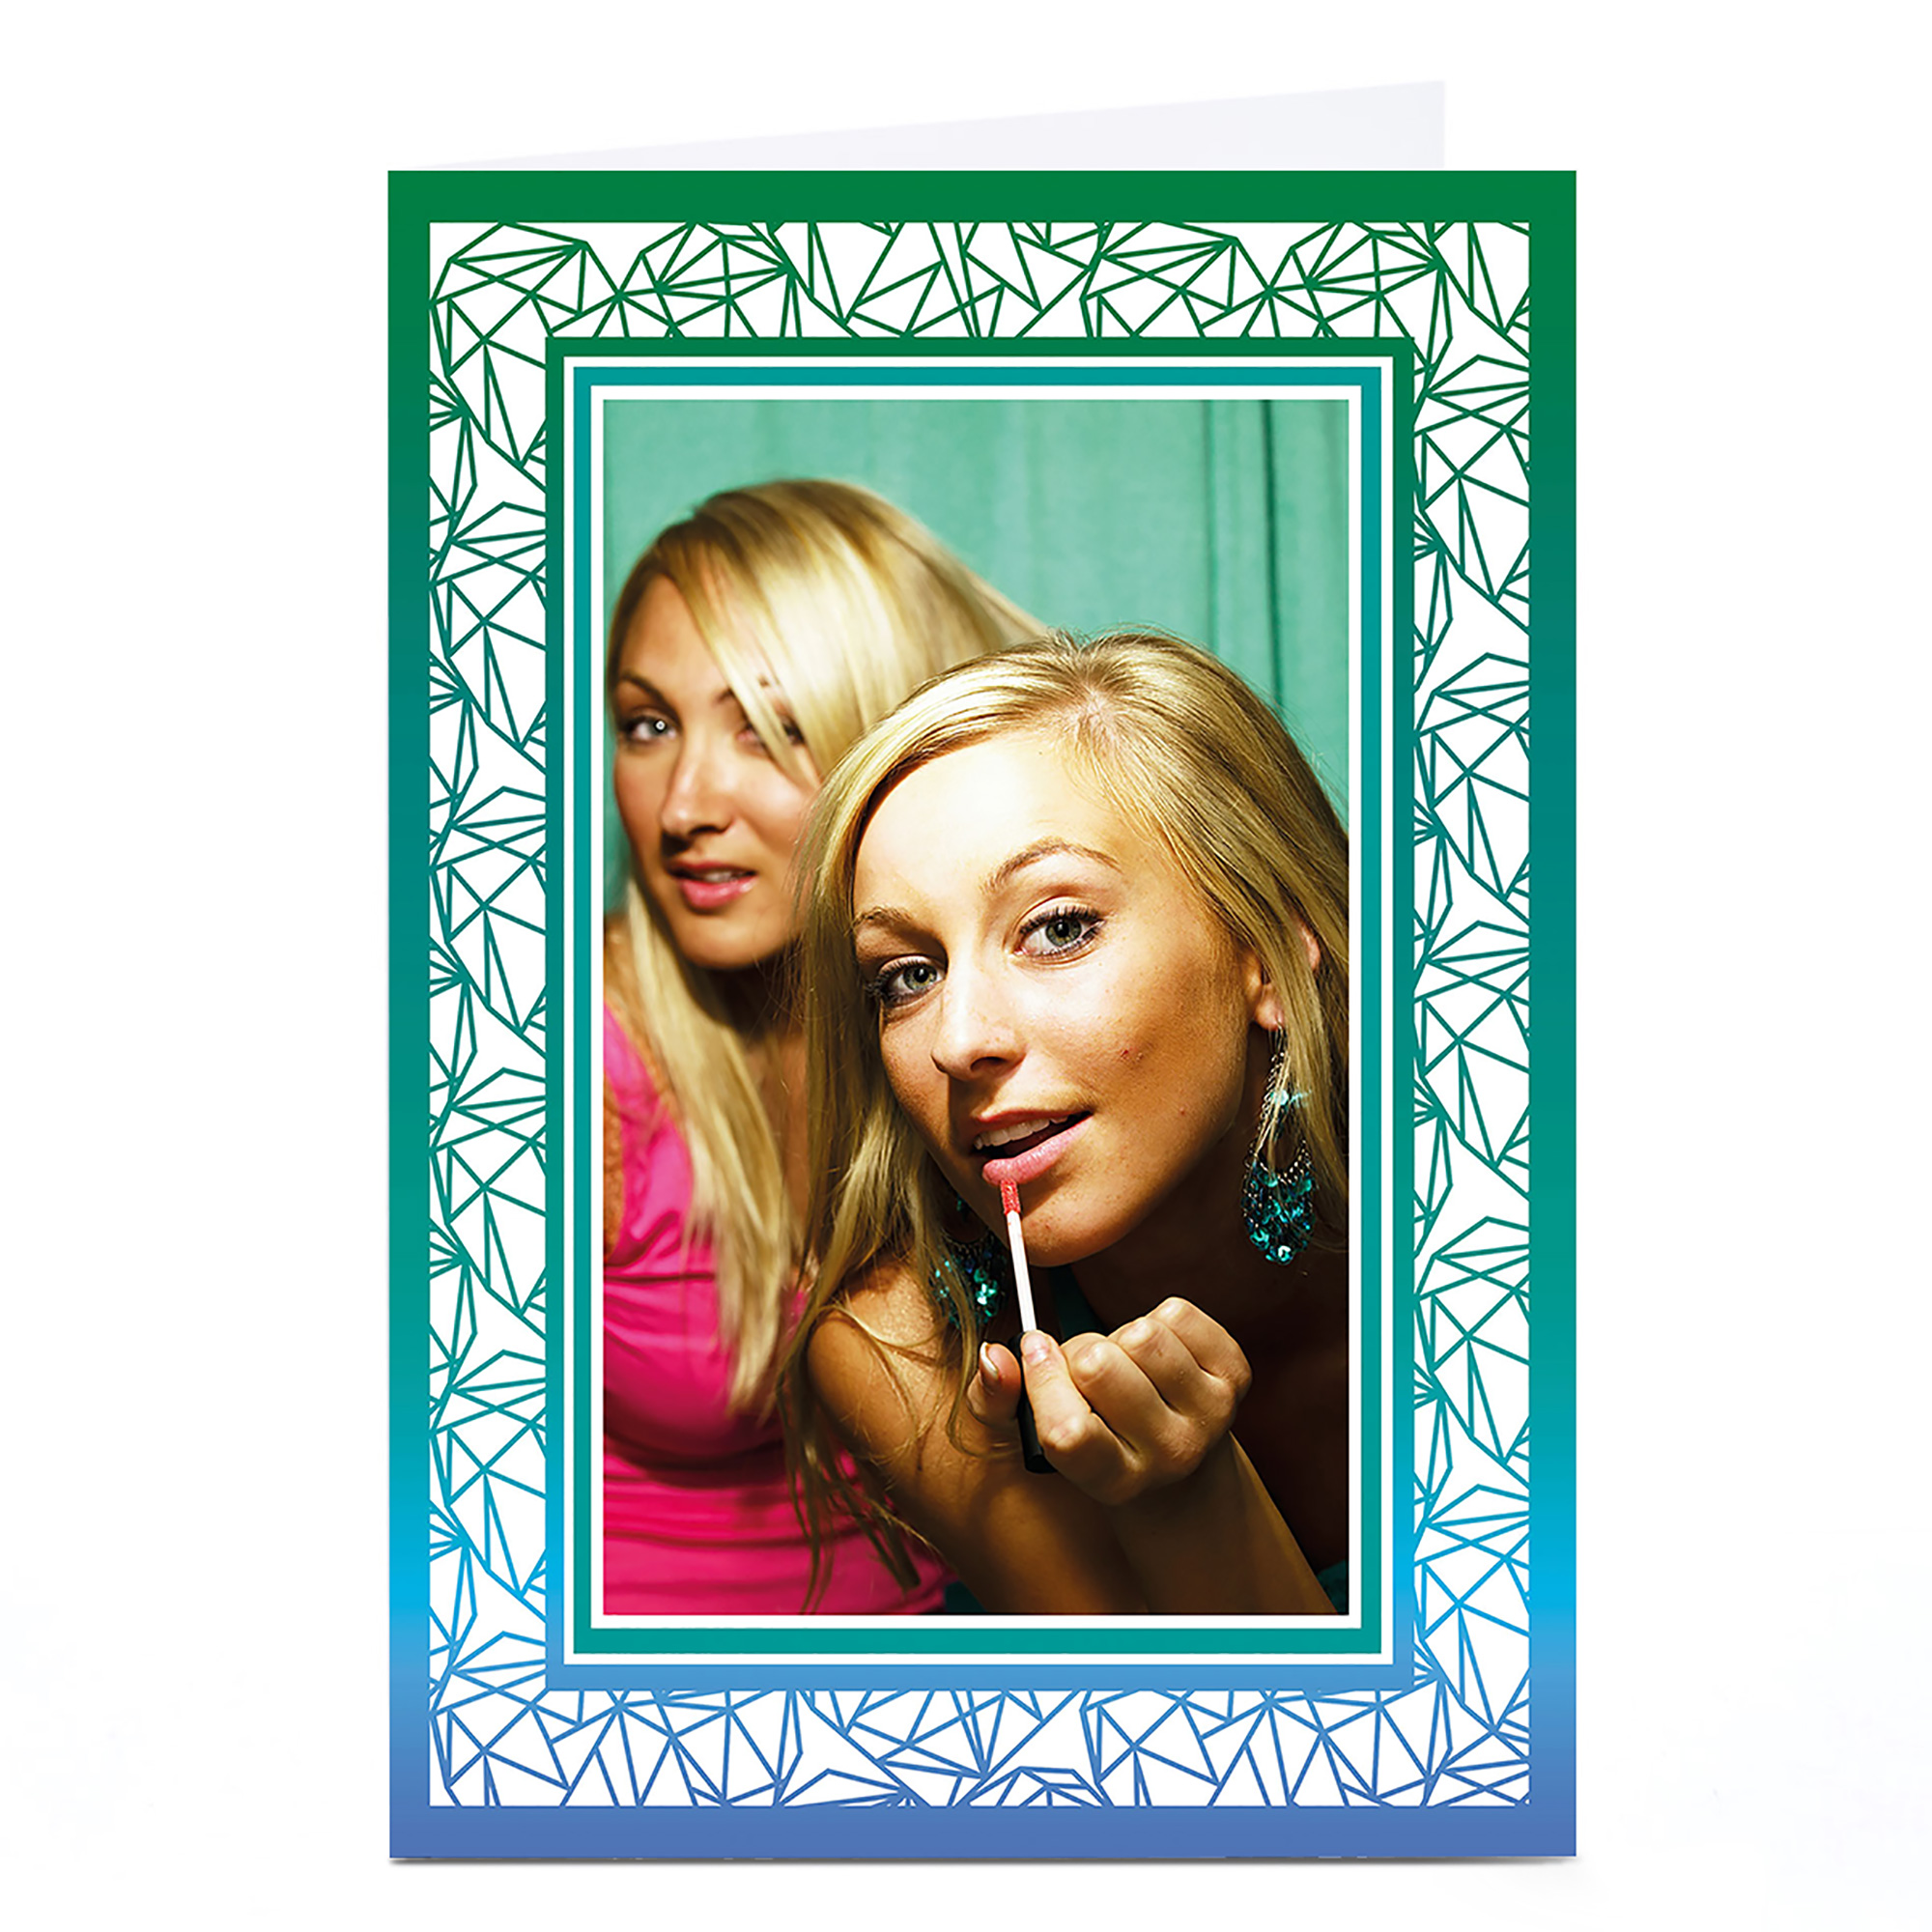 Photo Card - Green And Blue Geometric Frame